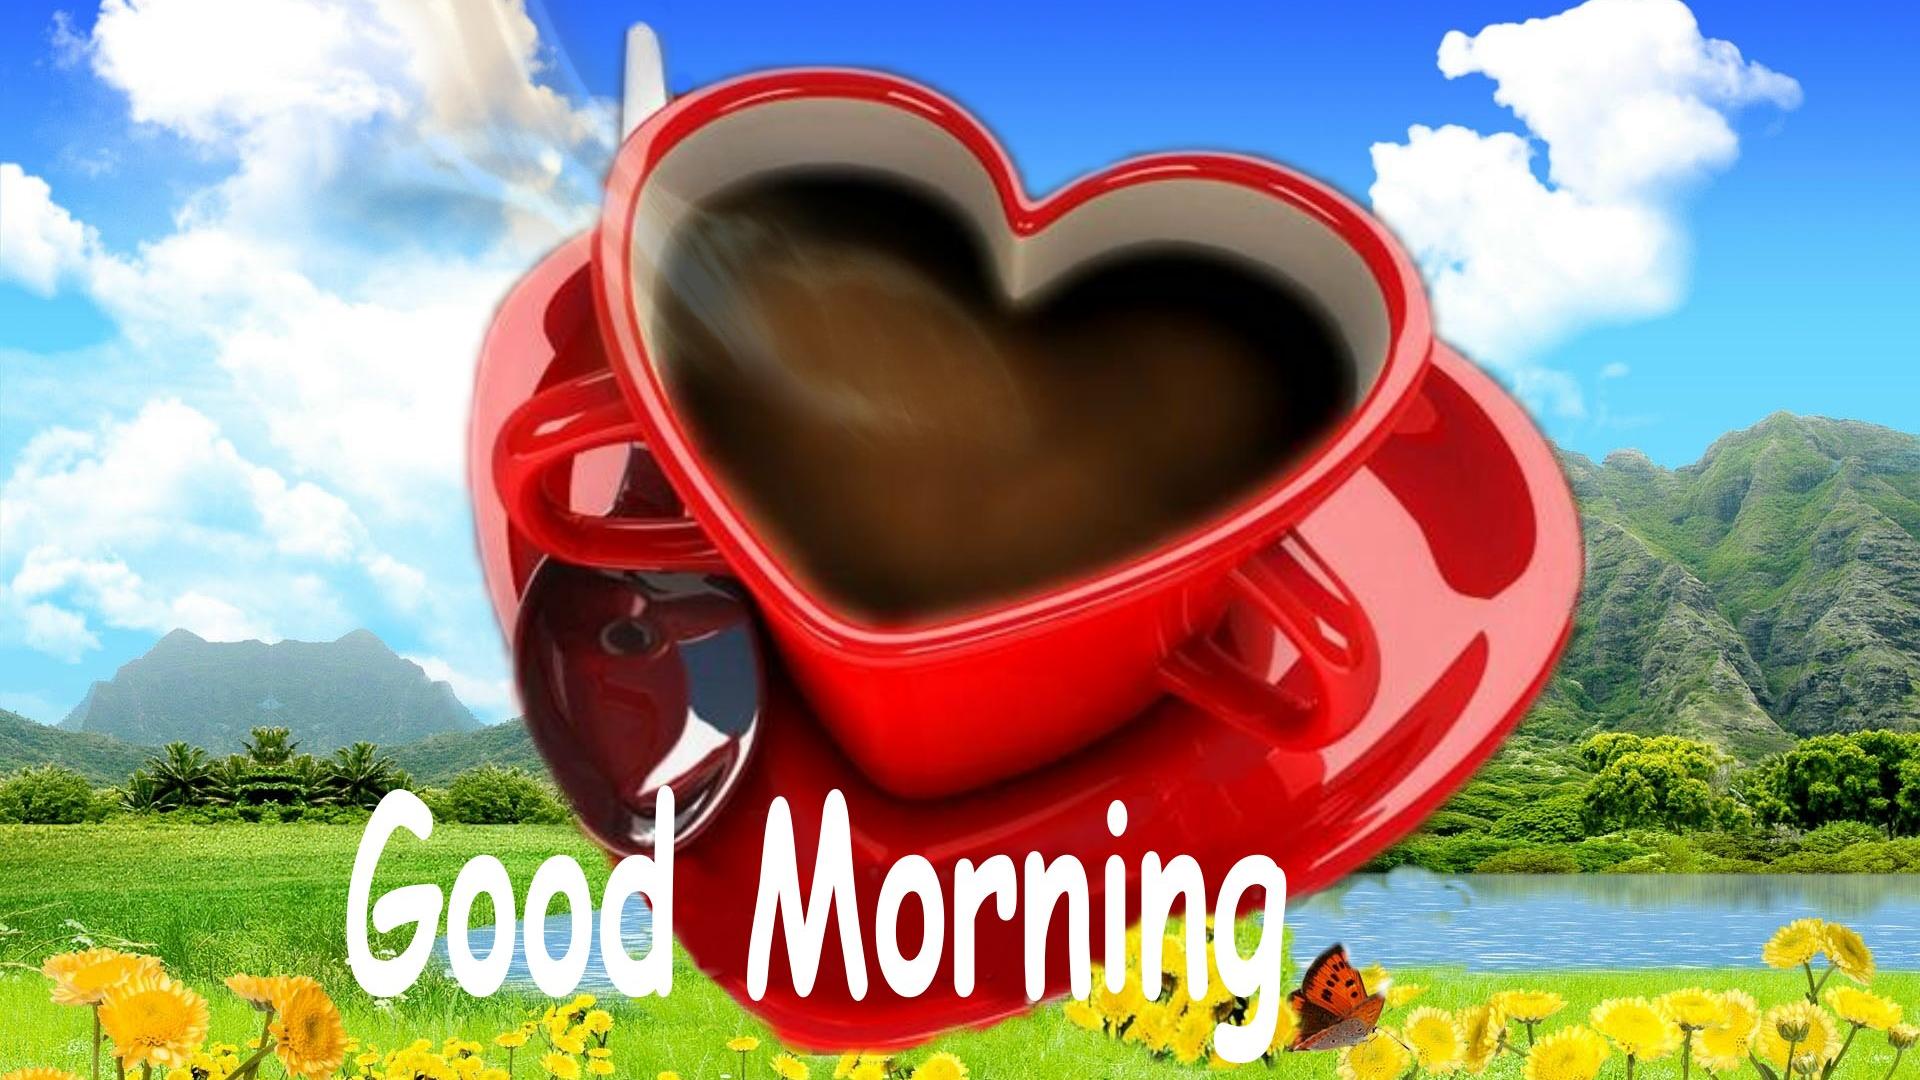 Love Good Morning Images HD Wallpaper of Greeting   hdwallpaper2013